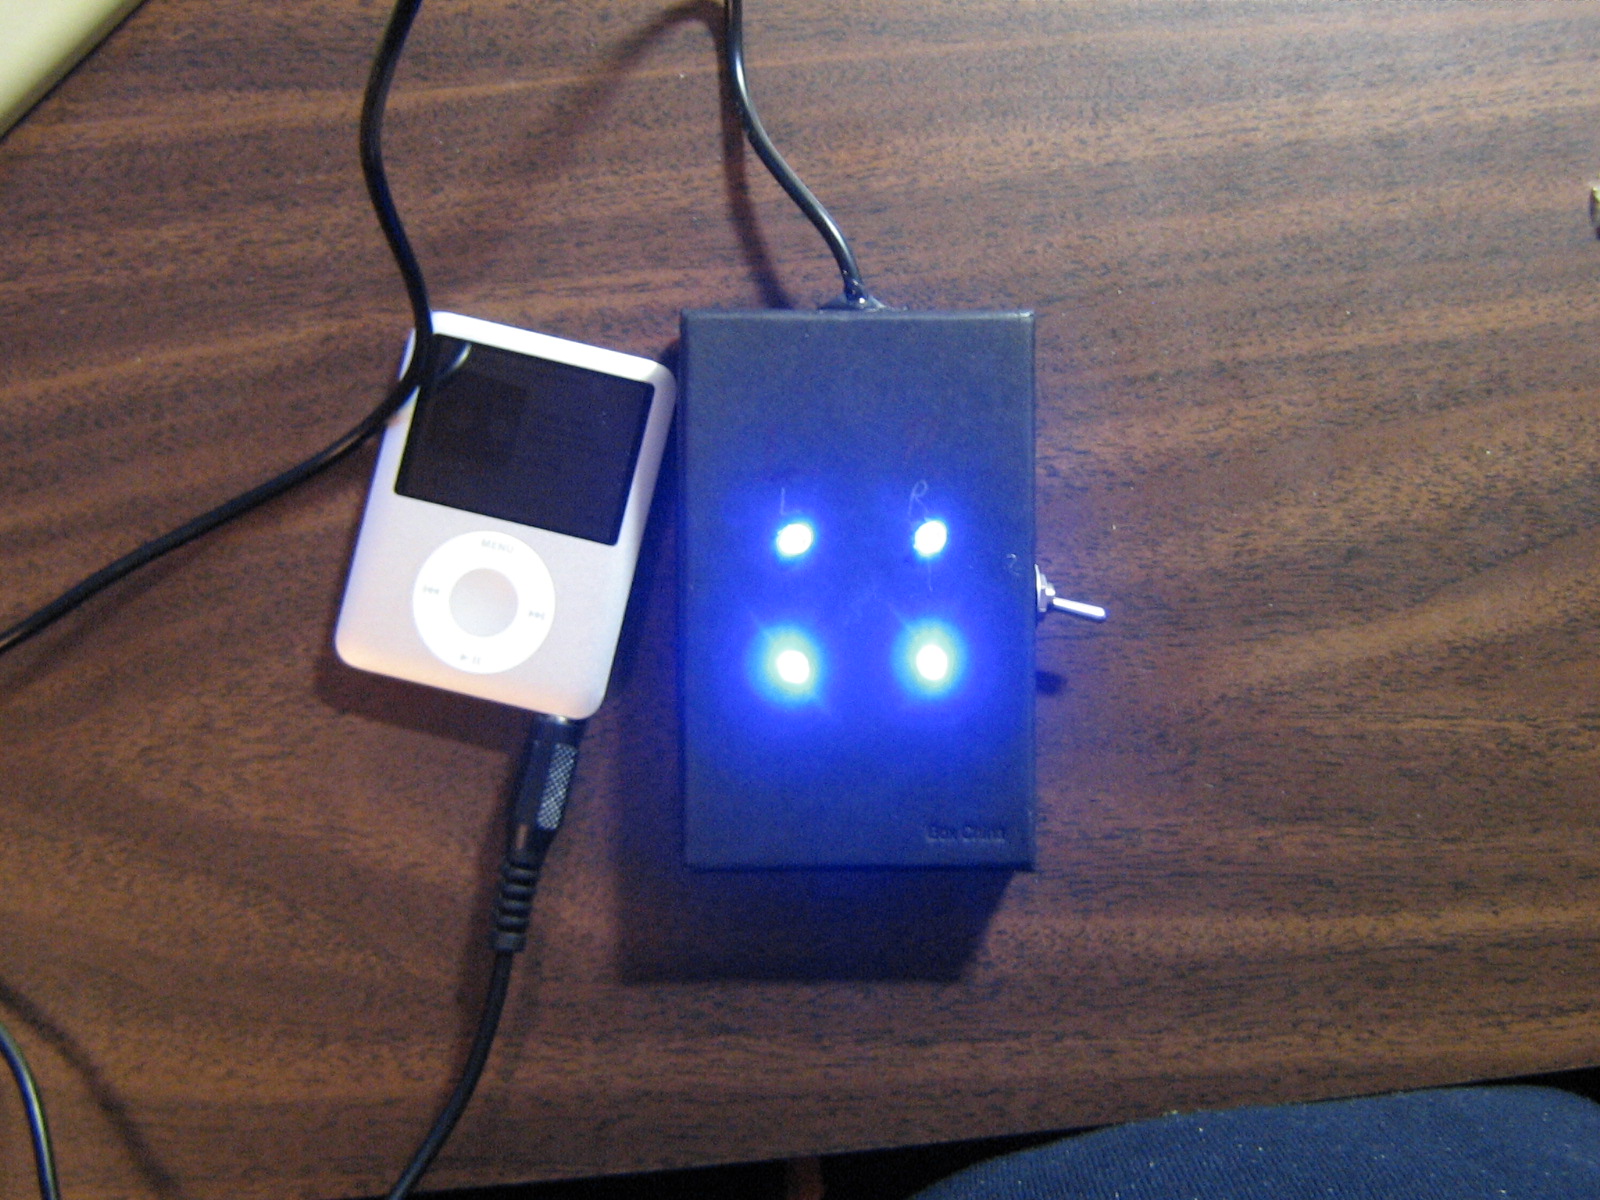 Blinking LEDs to Music